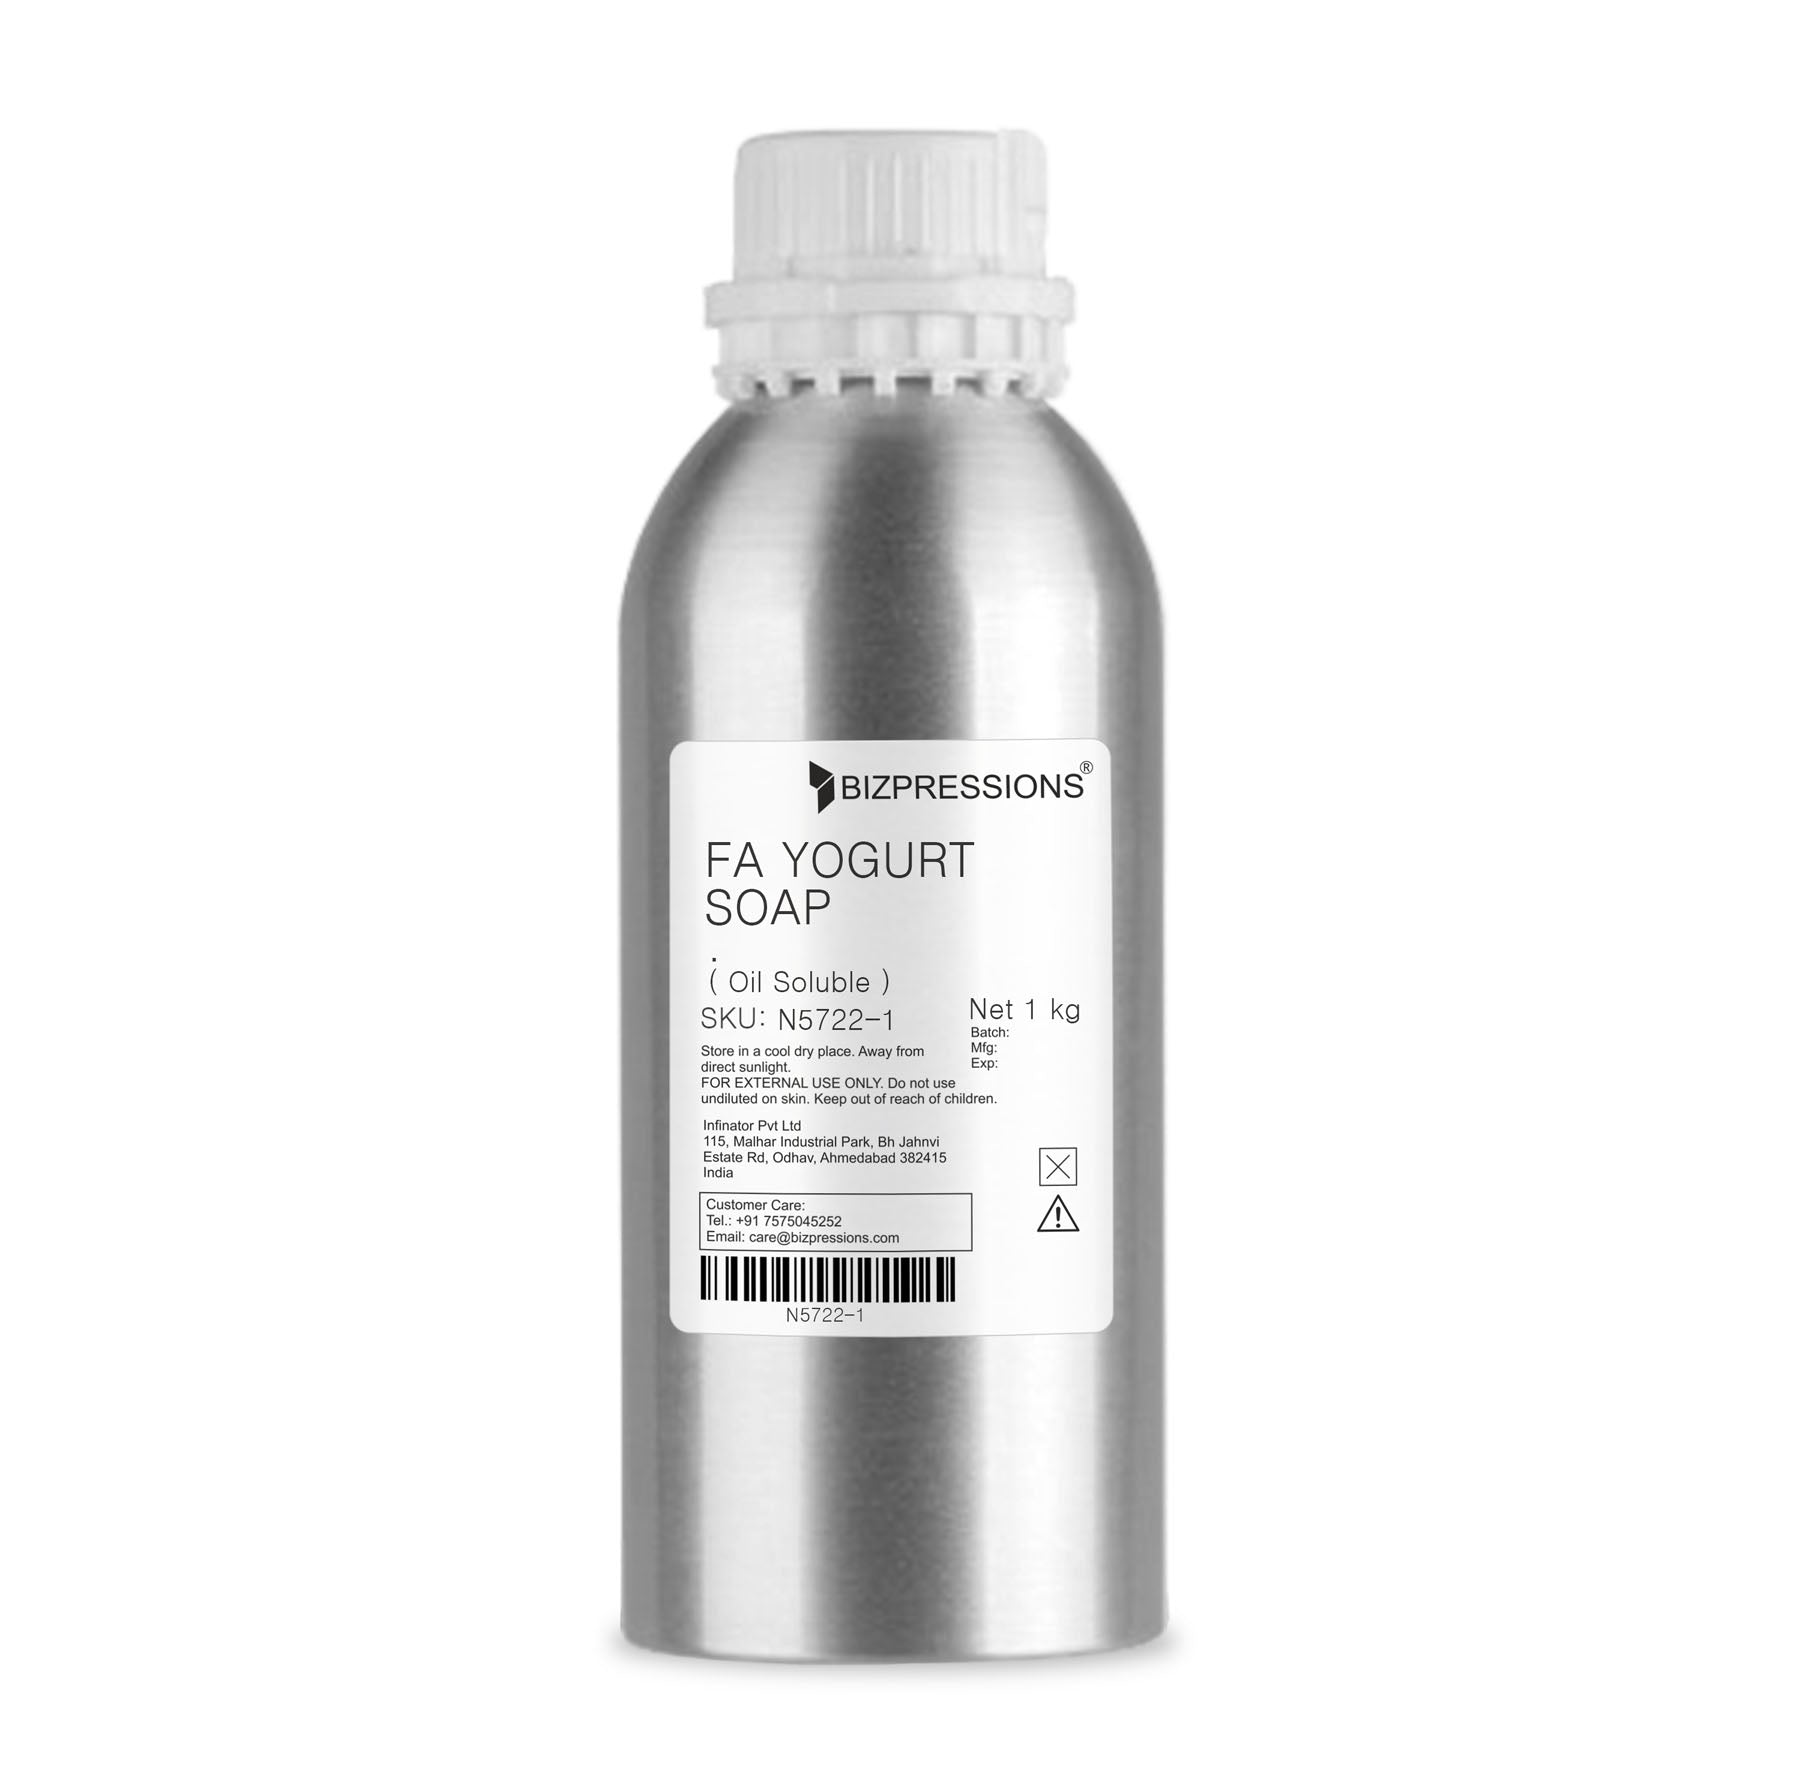 FA YOGURT SOAP - Fragrance ( Oil Soluble ) - 1 kg